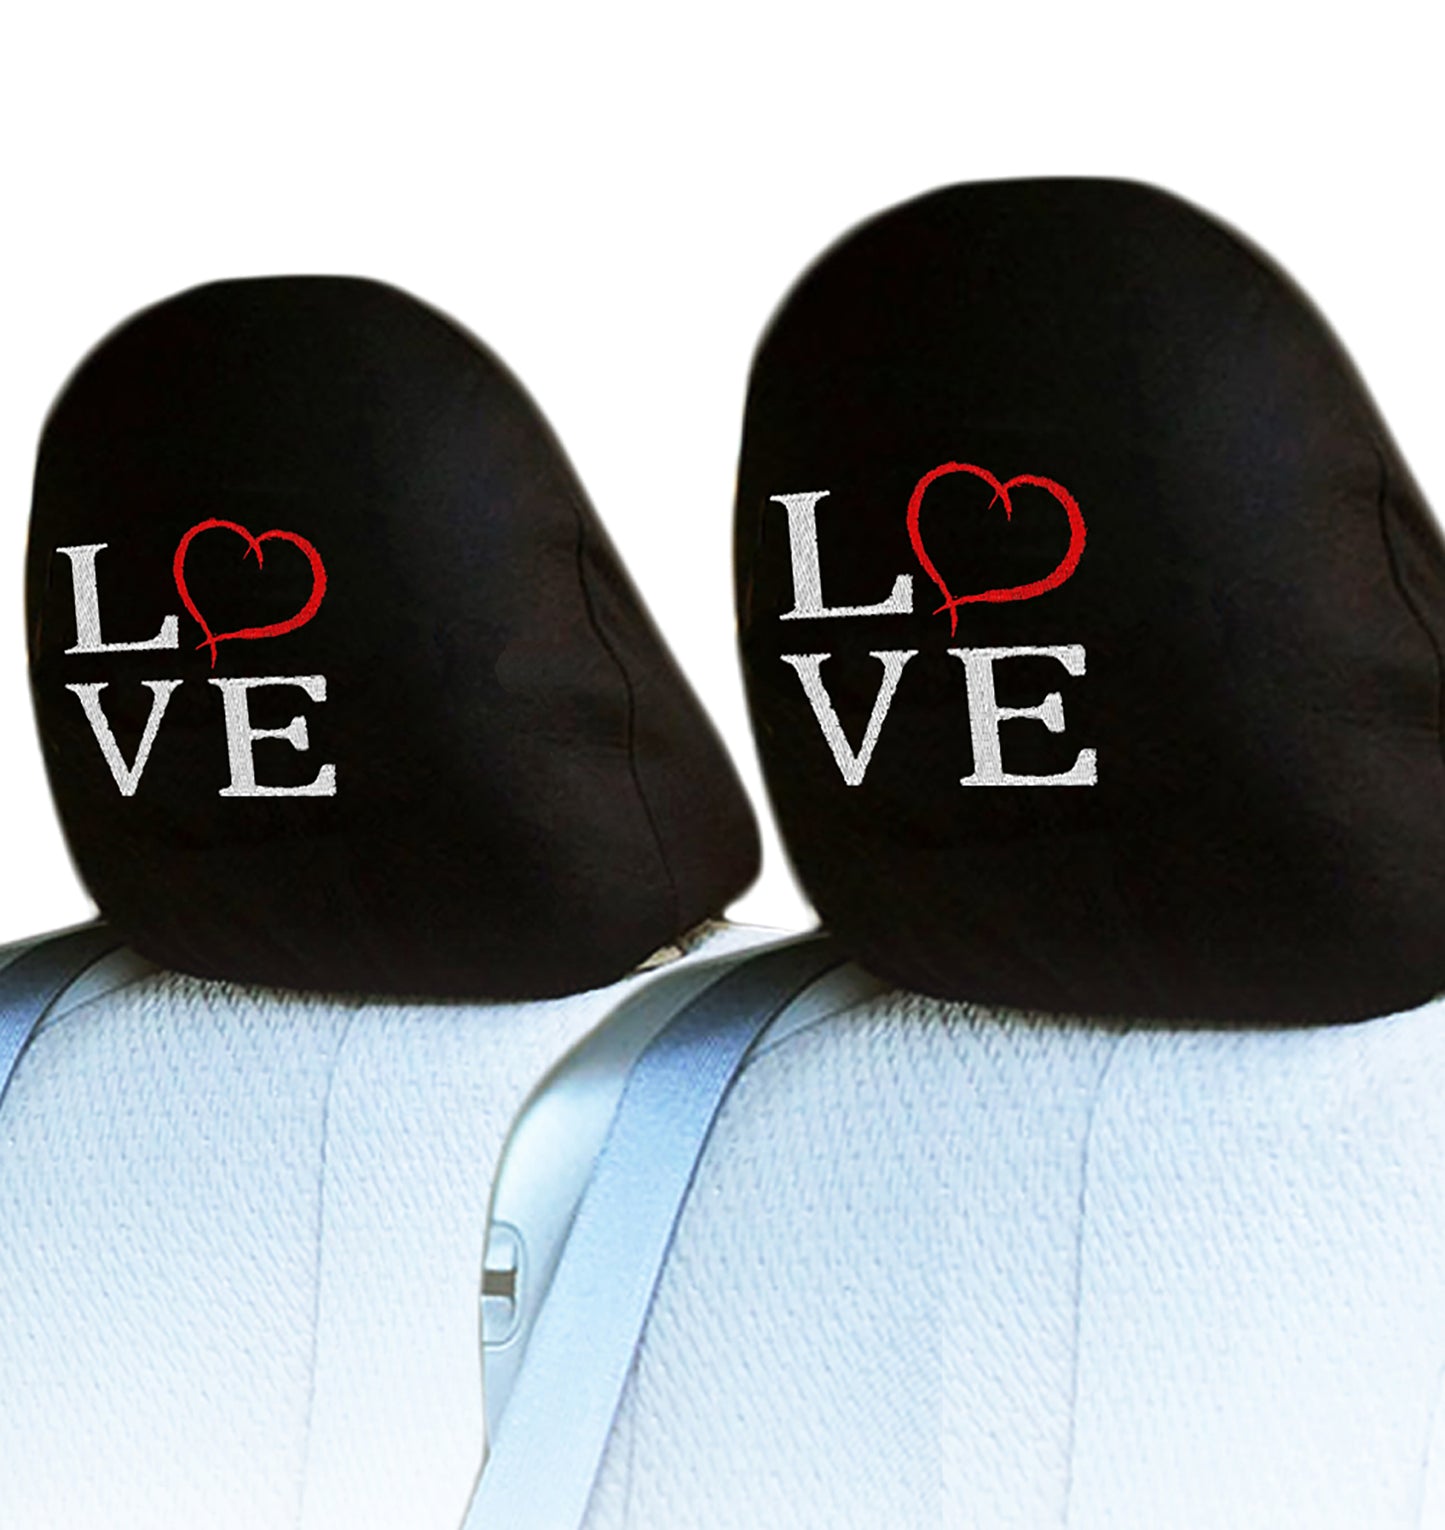 Car headrest cover with LOVE design pair